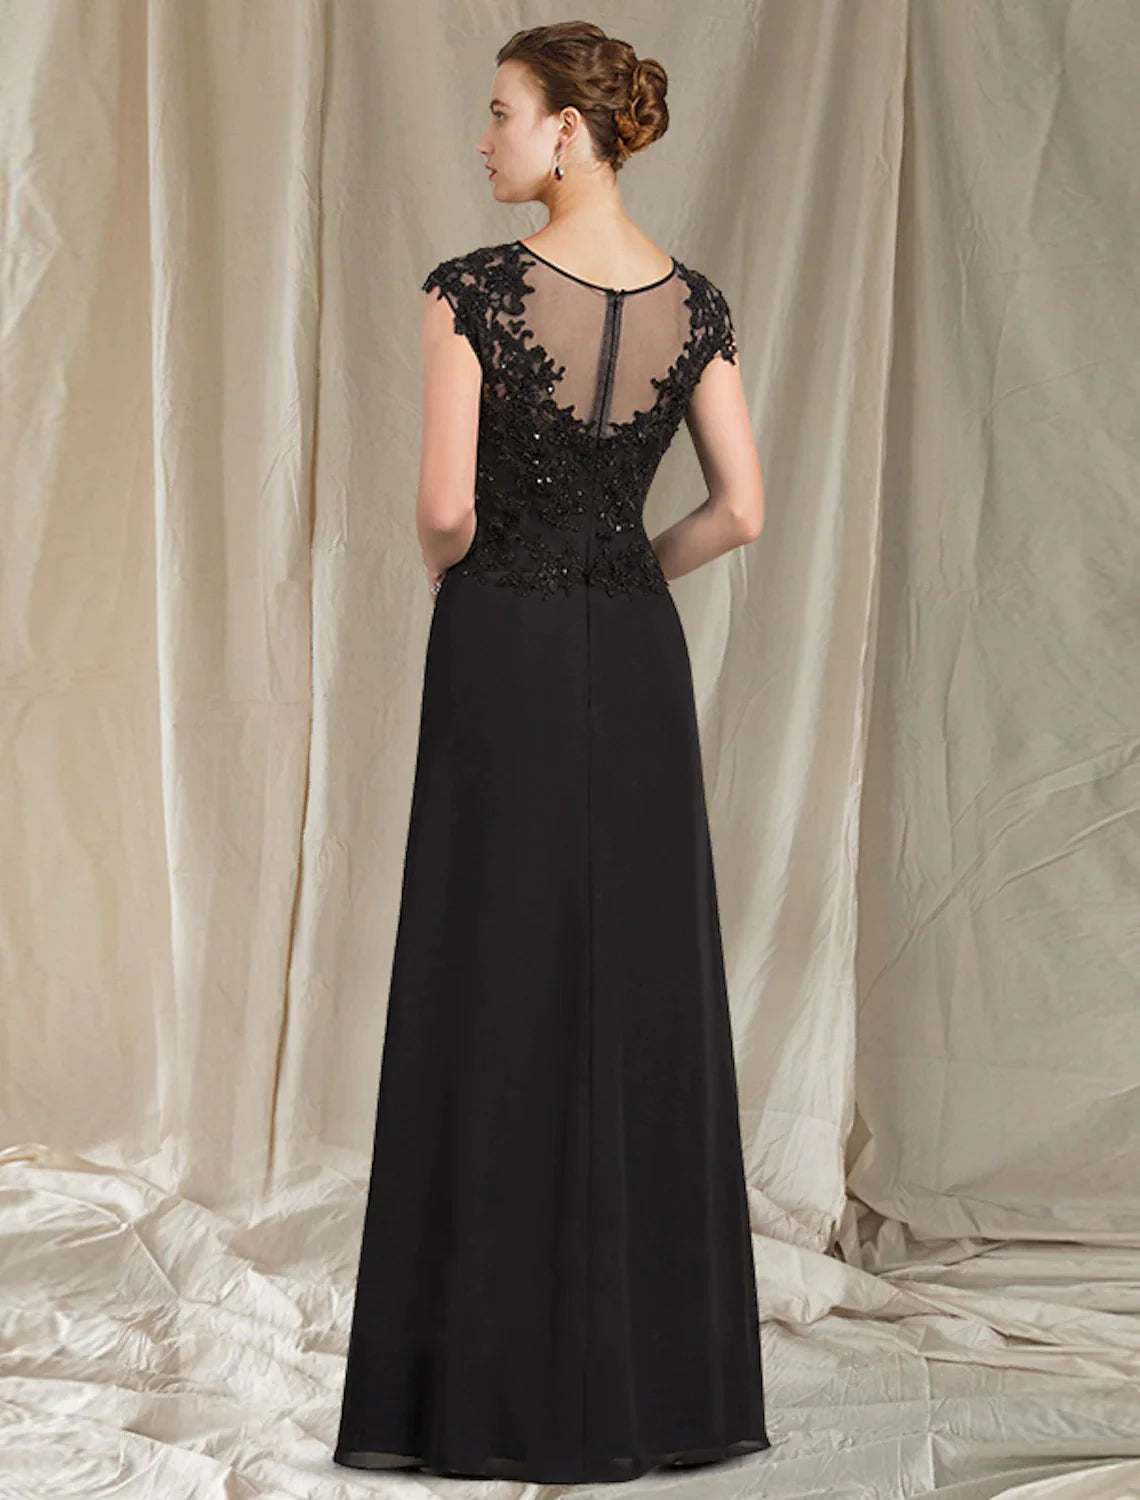 Sheath / Column Mother of the Bride Dress Elegant Jewel Neck Floor Length Chiffon Lace Short Sleeve with Appliques Split Front